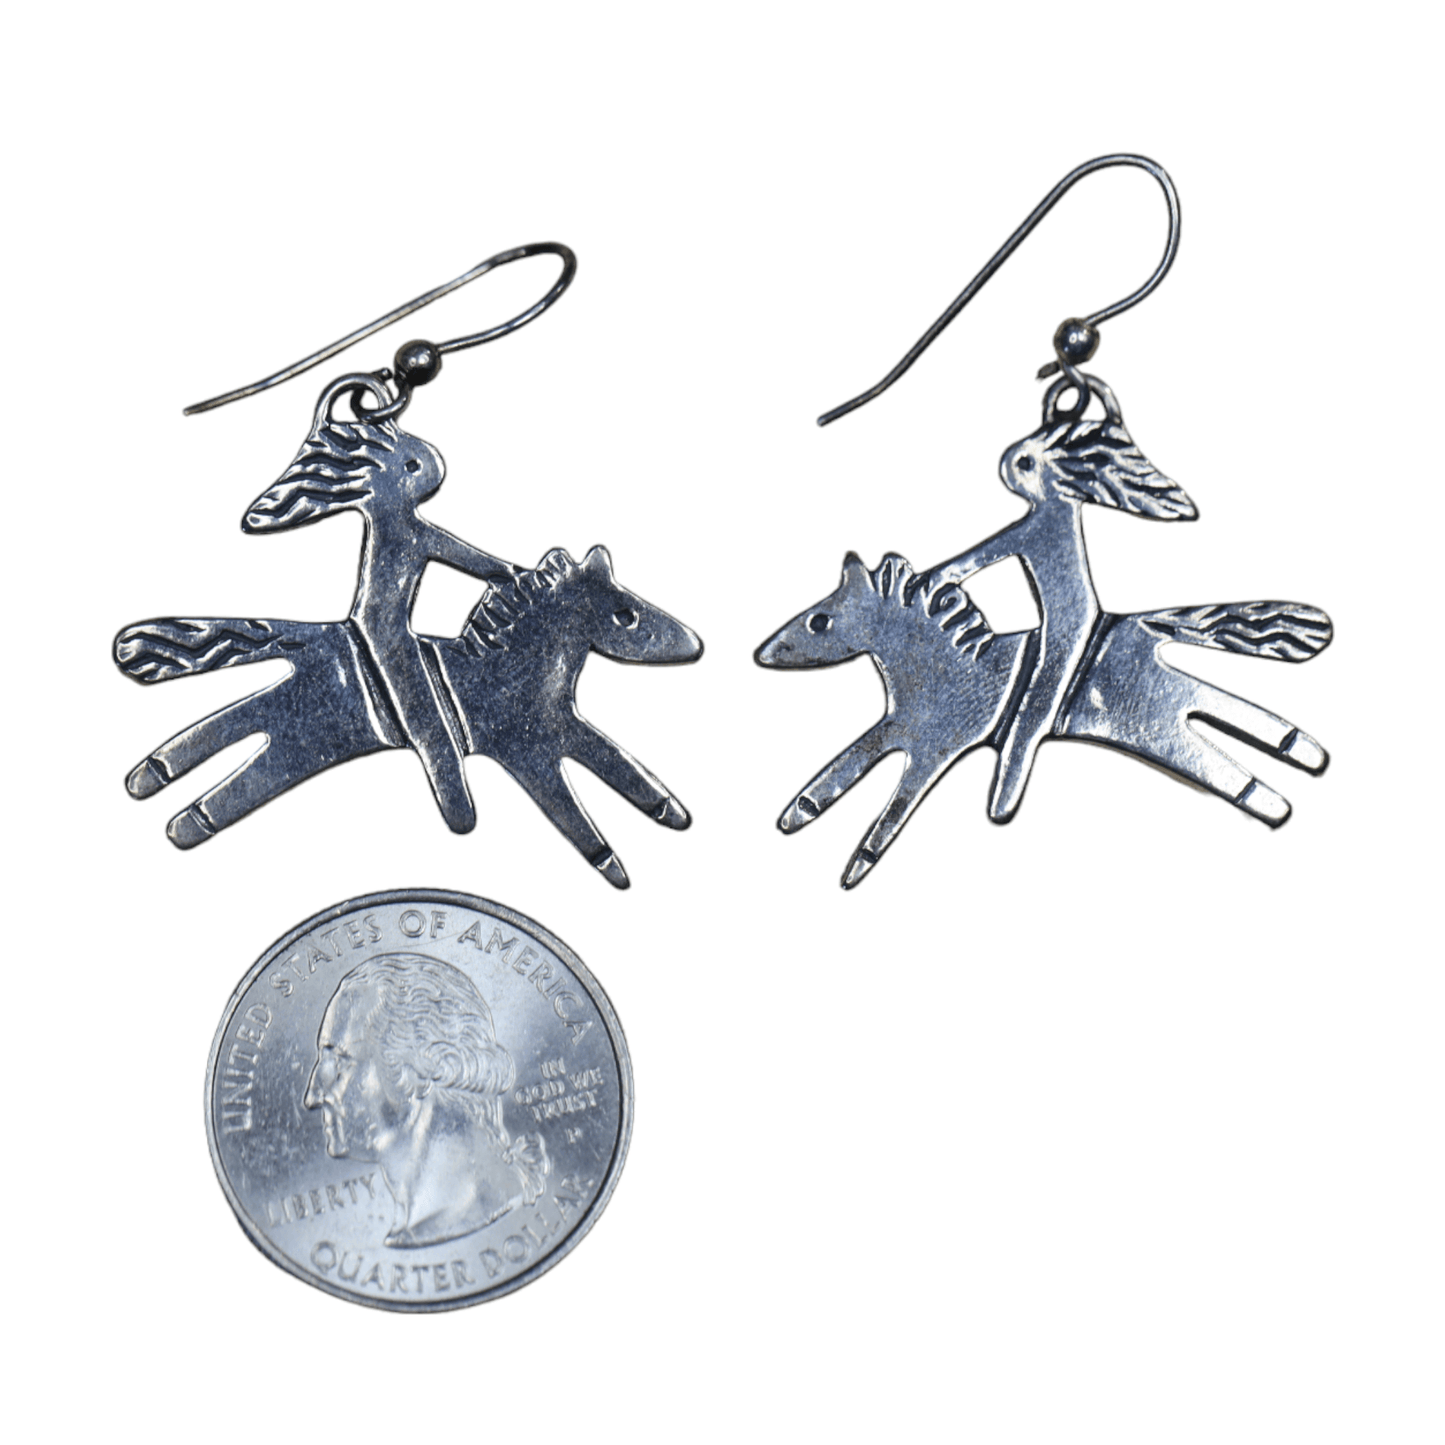 'Horse & Bareback Rider' Earrings in Sterling Silver